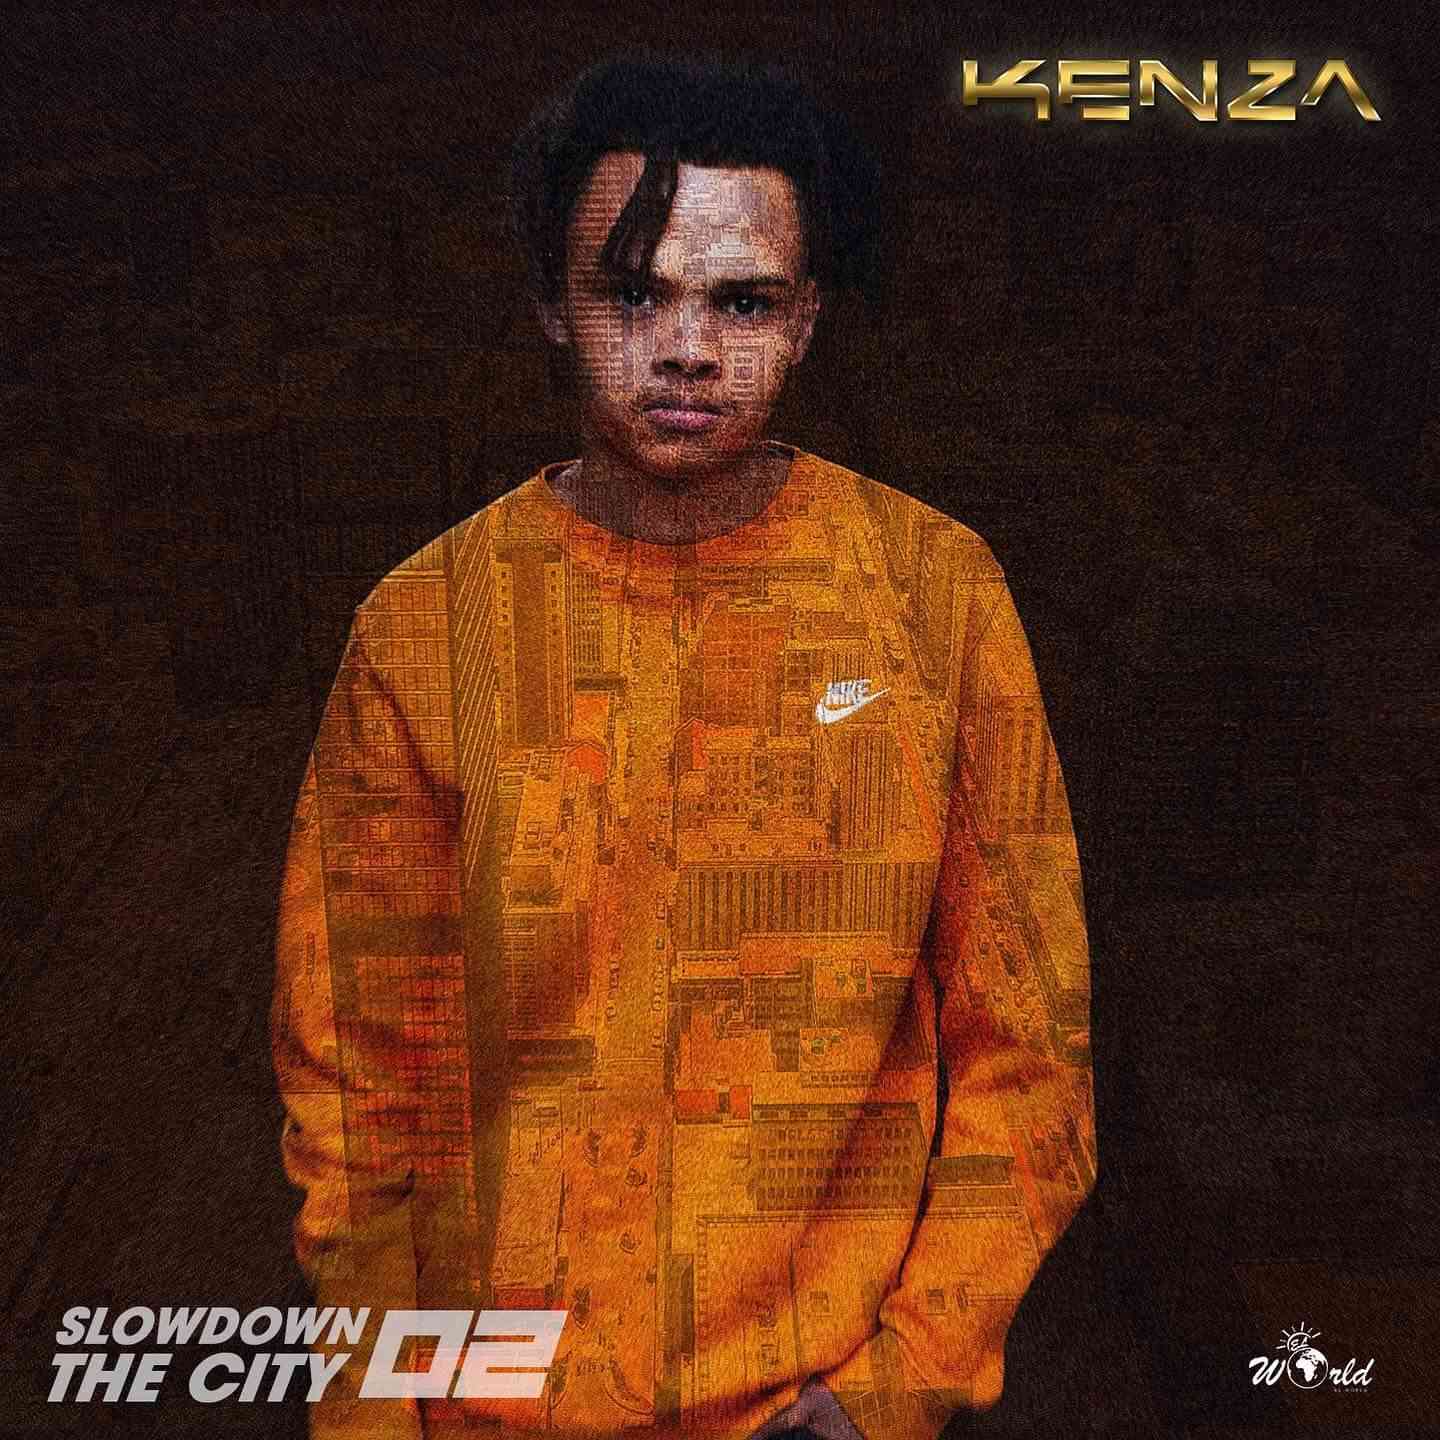 Kenza Slowdown The City Mix 002 Mp3 Download Fakaza